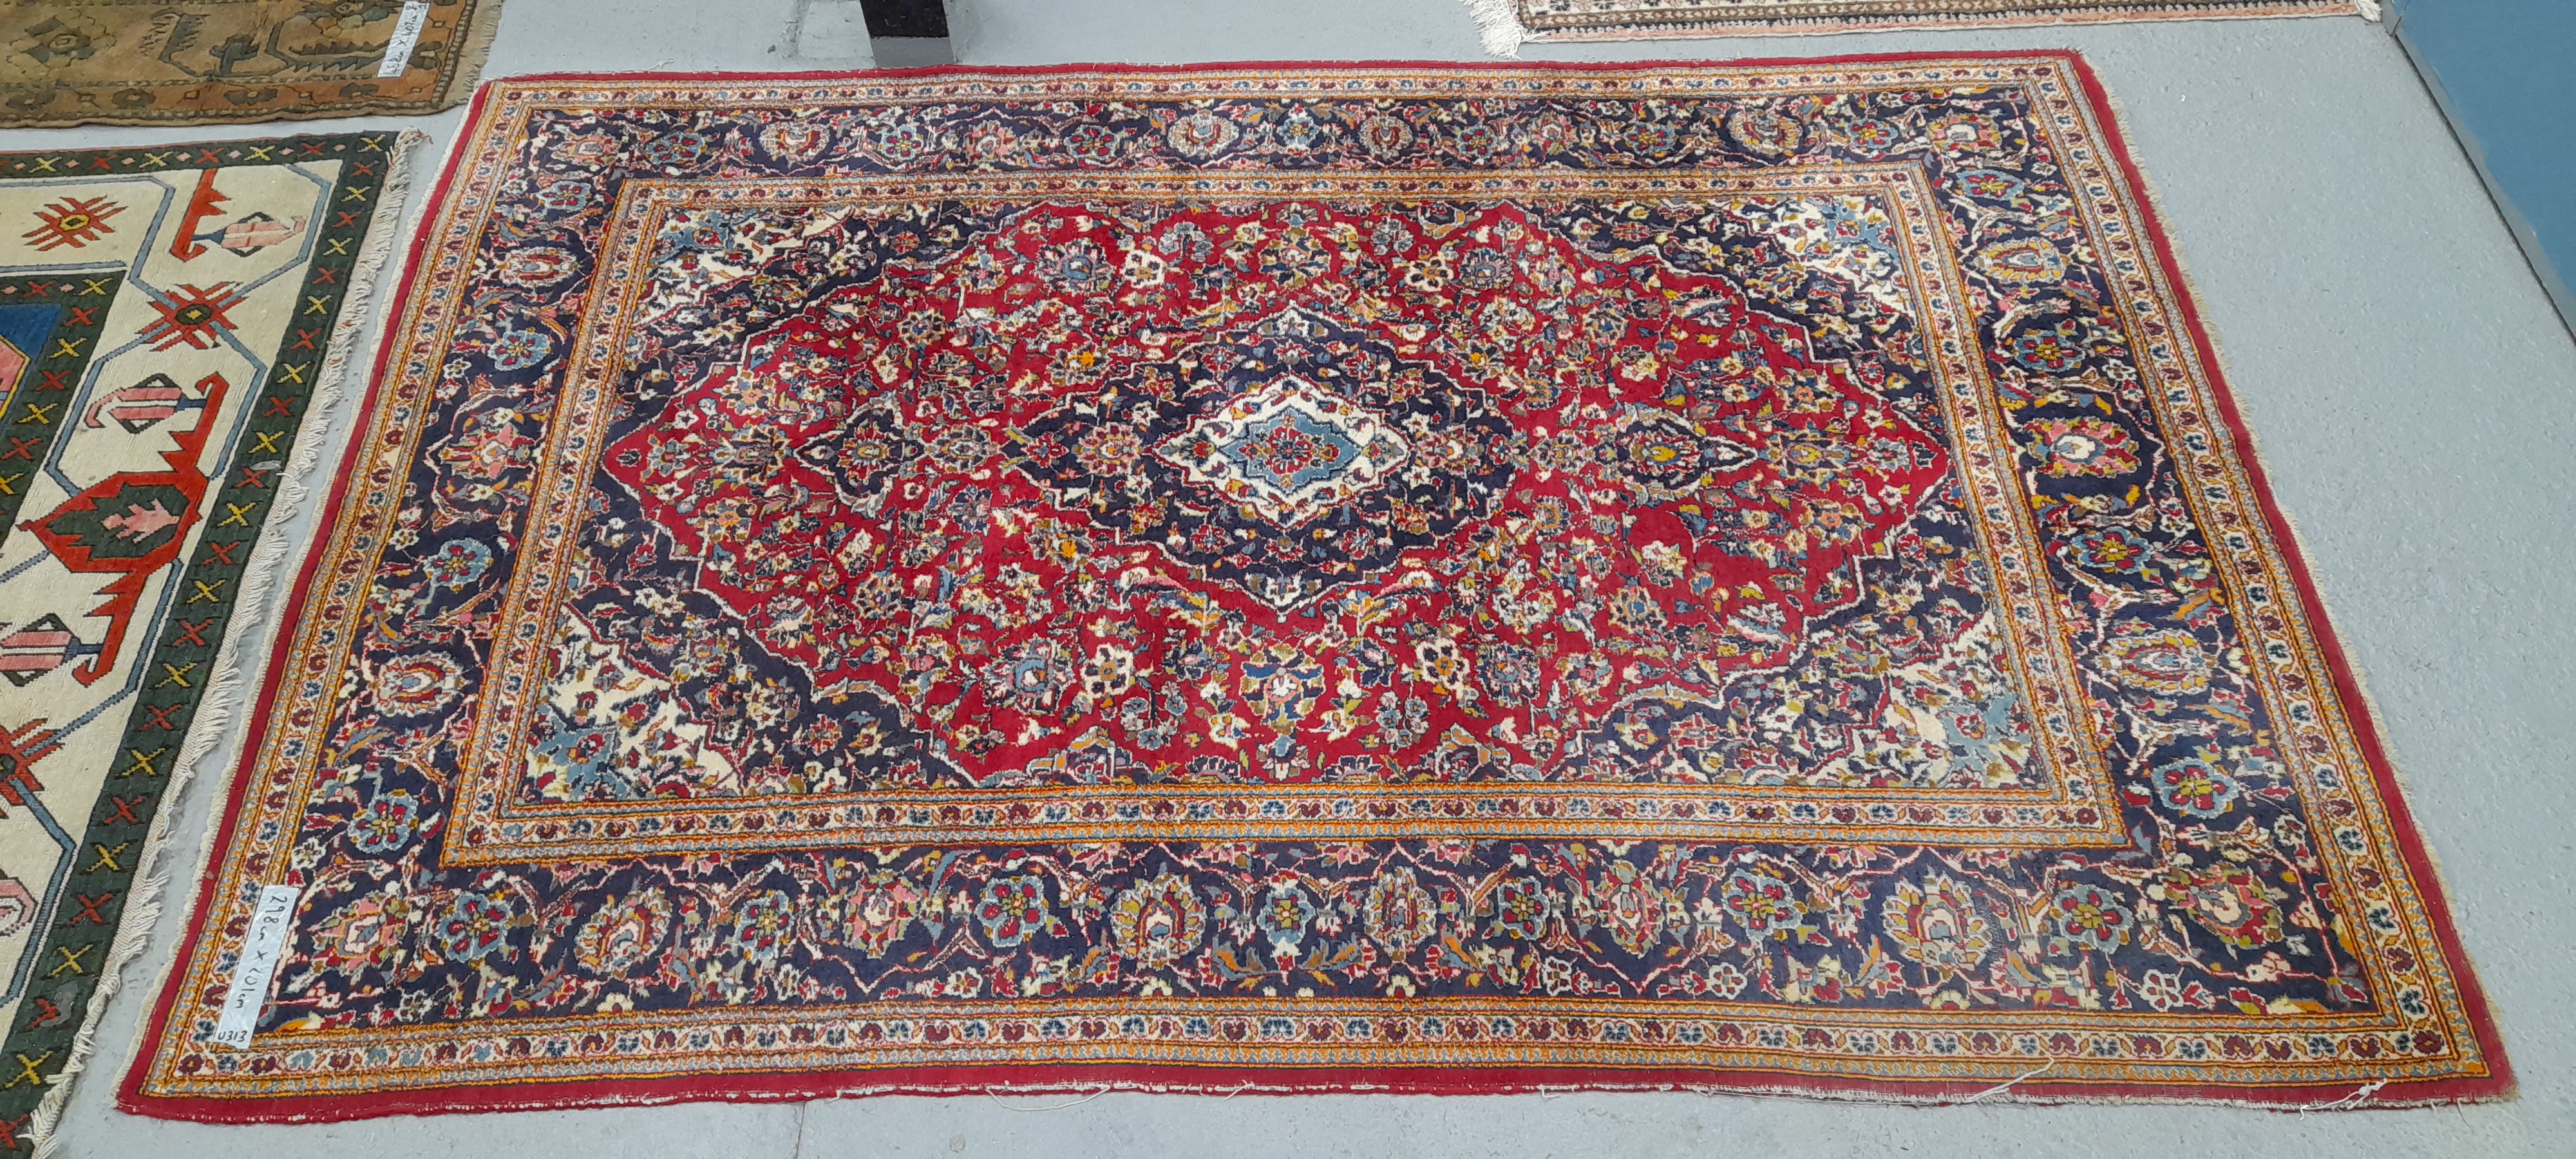 A PERSIAN CARPET OF CLASSIC DESIGN 298 x 201 cm